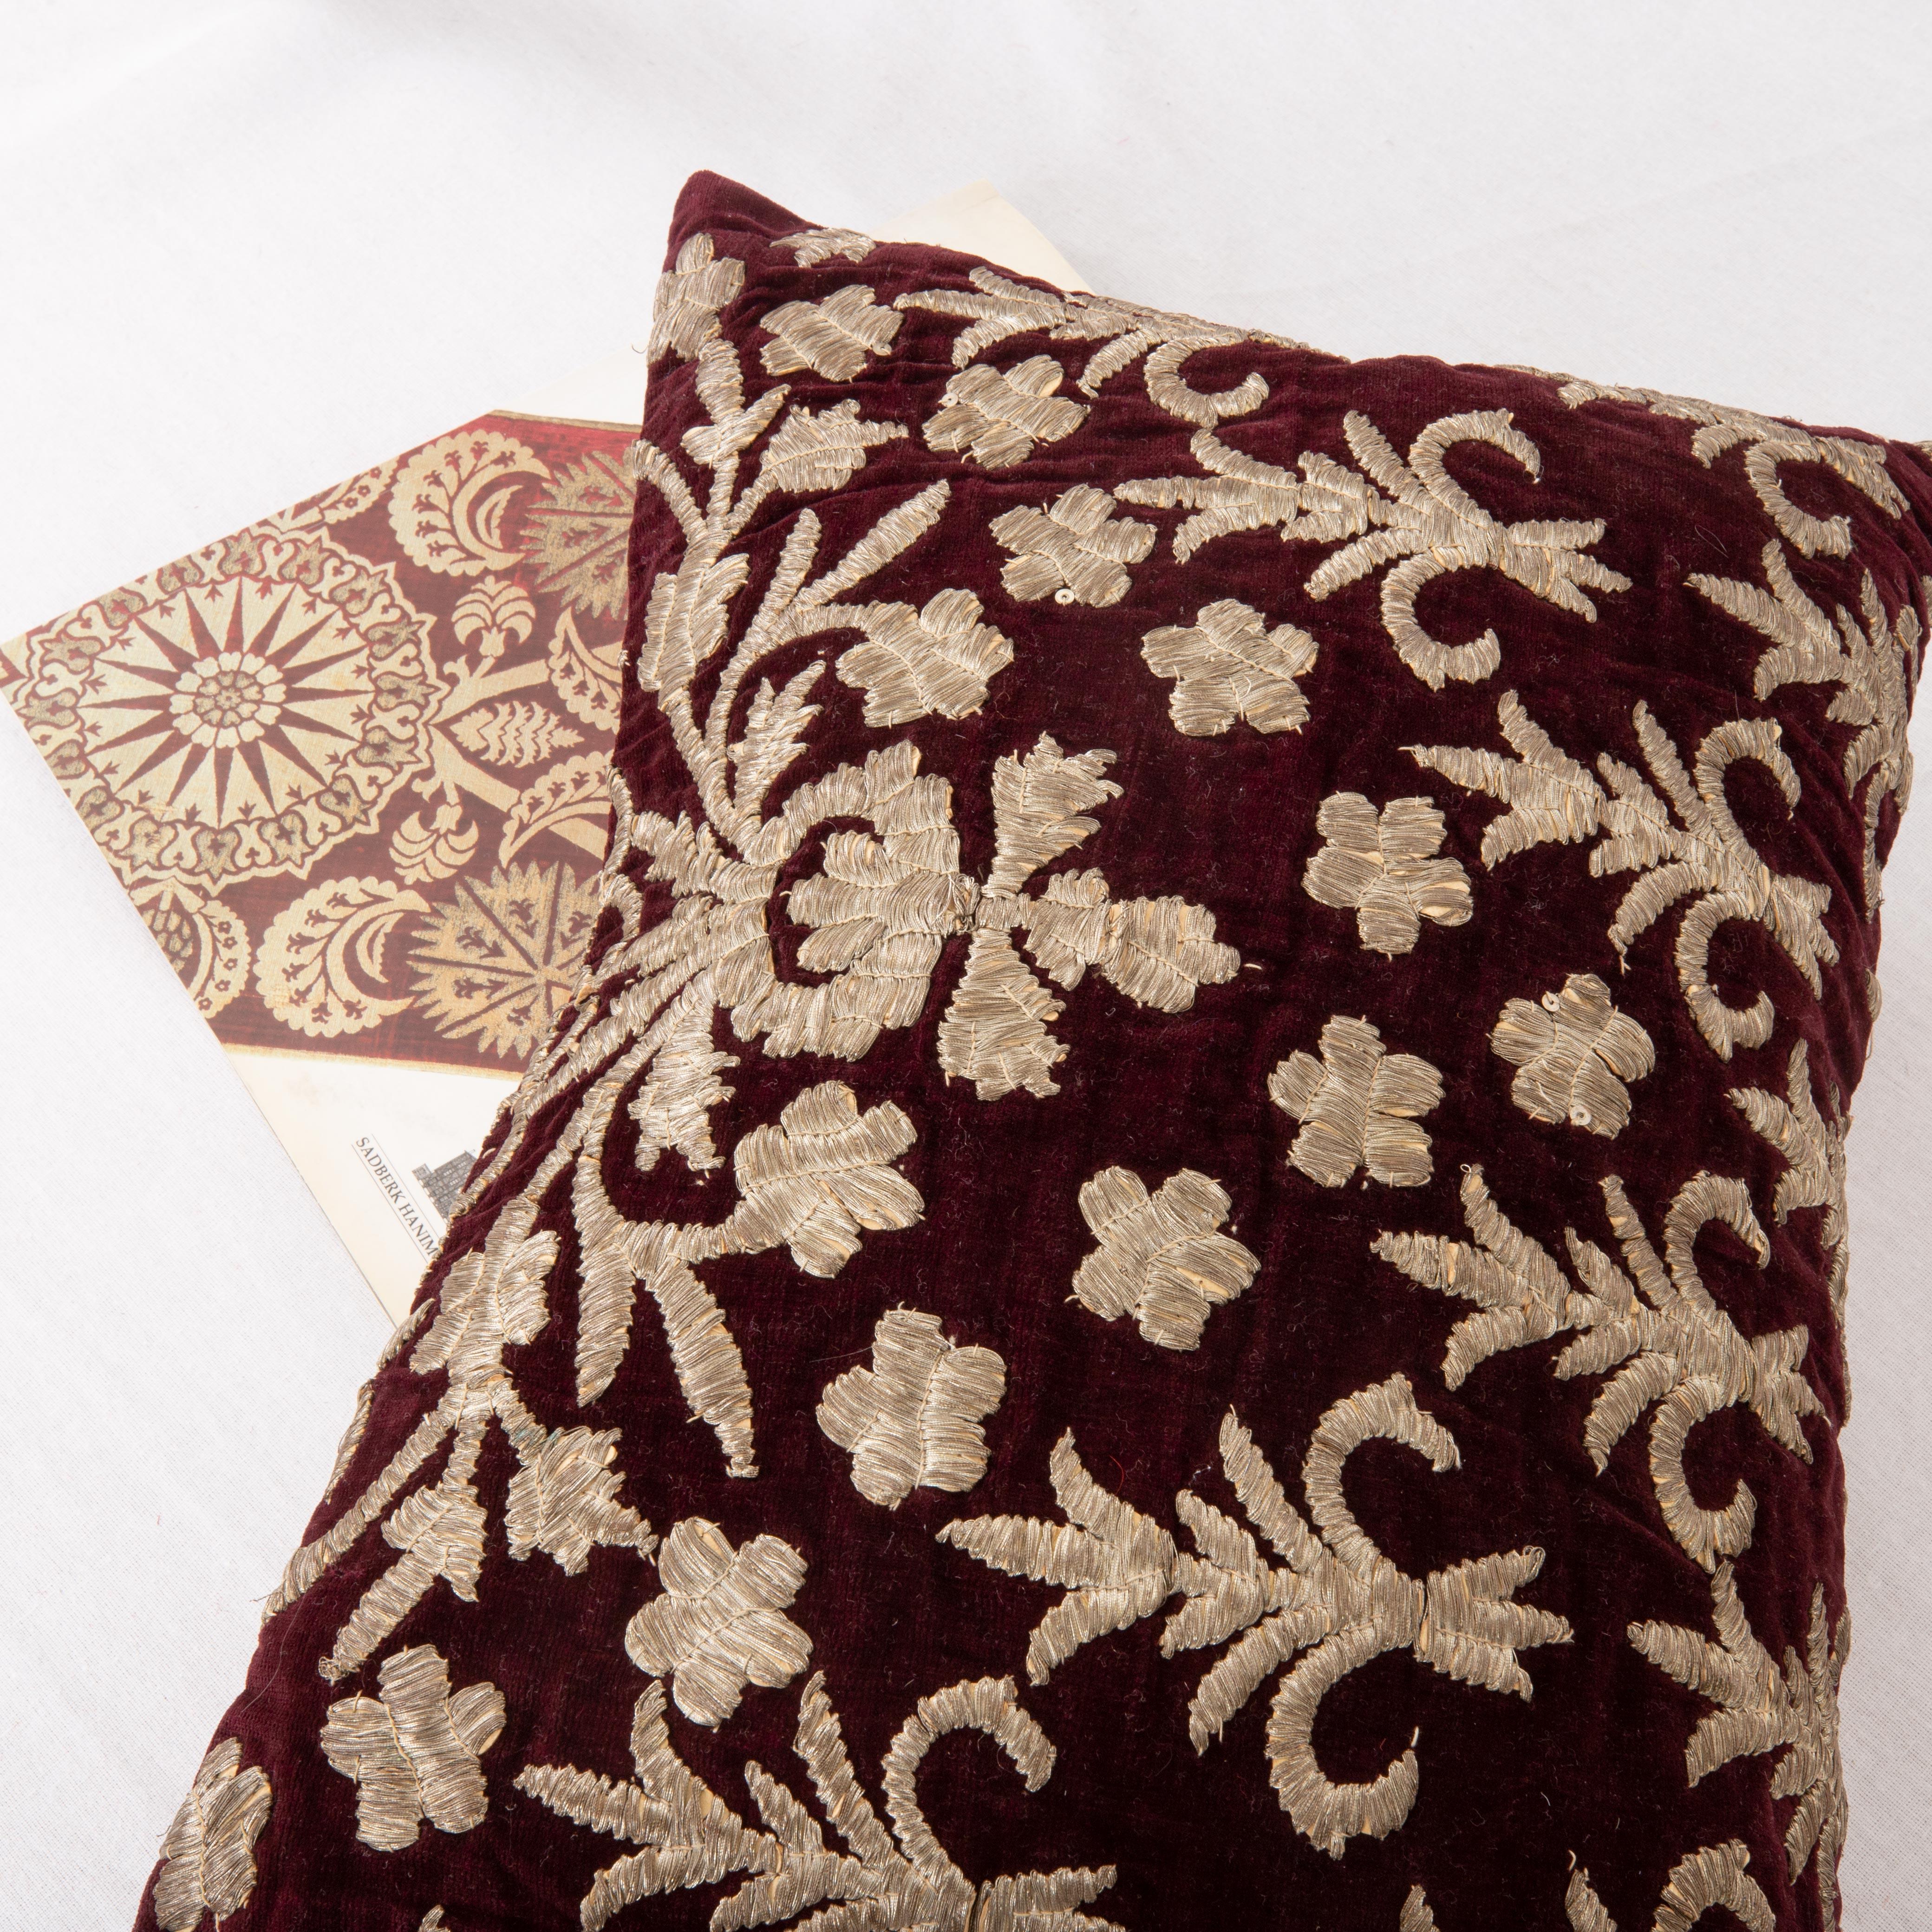 Embroidered Antique Silk Velvet Ottoman Sarma Pillow Cover, L 19th C. / E 20th Century